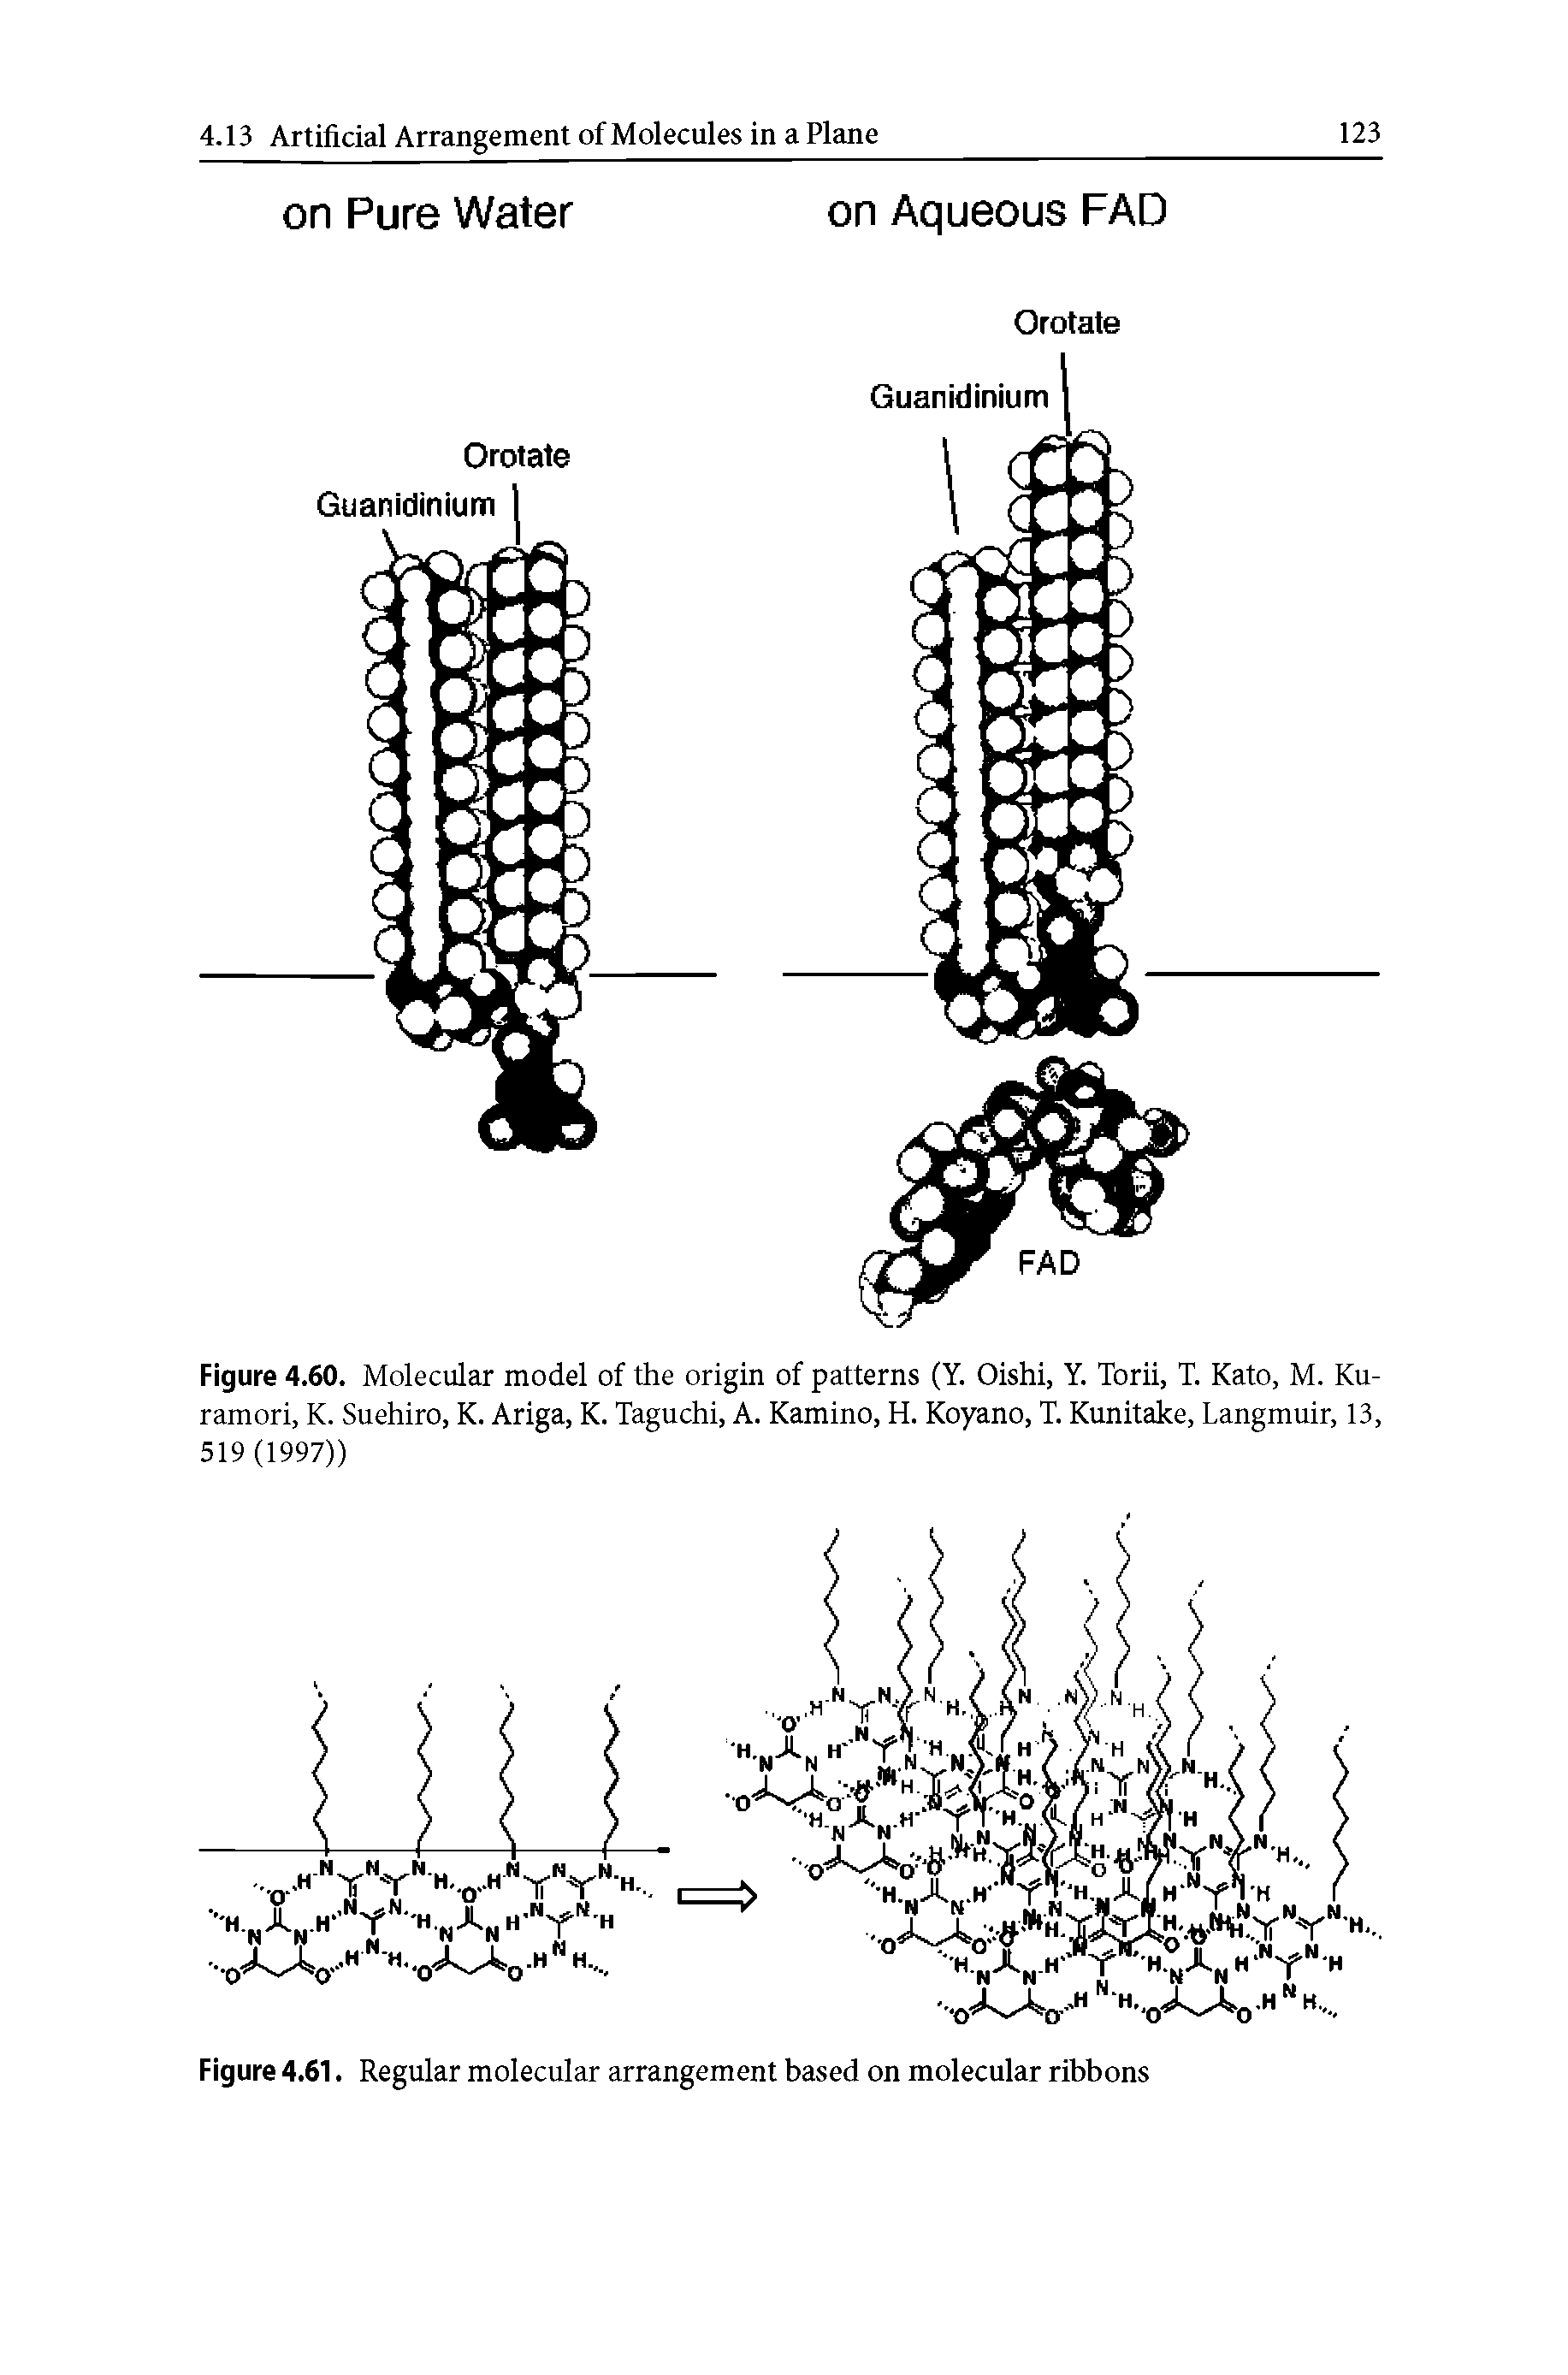 Figure 4.61, Regular molecular arrangement based on molecular ribbons...